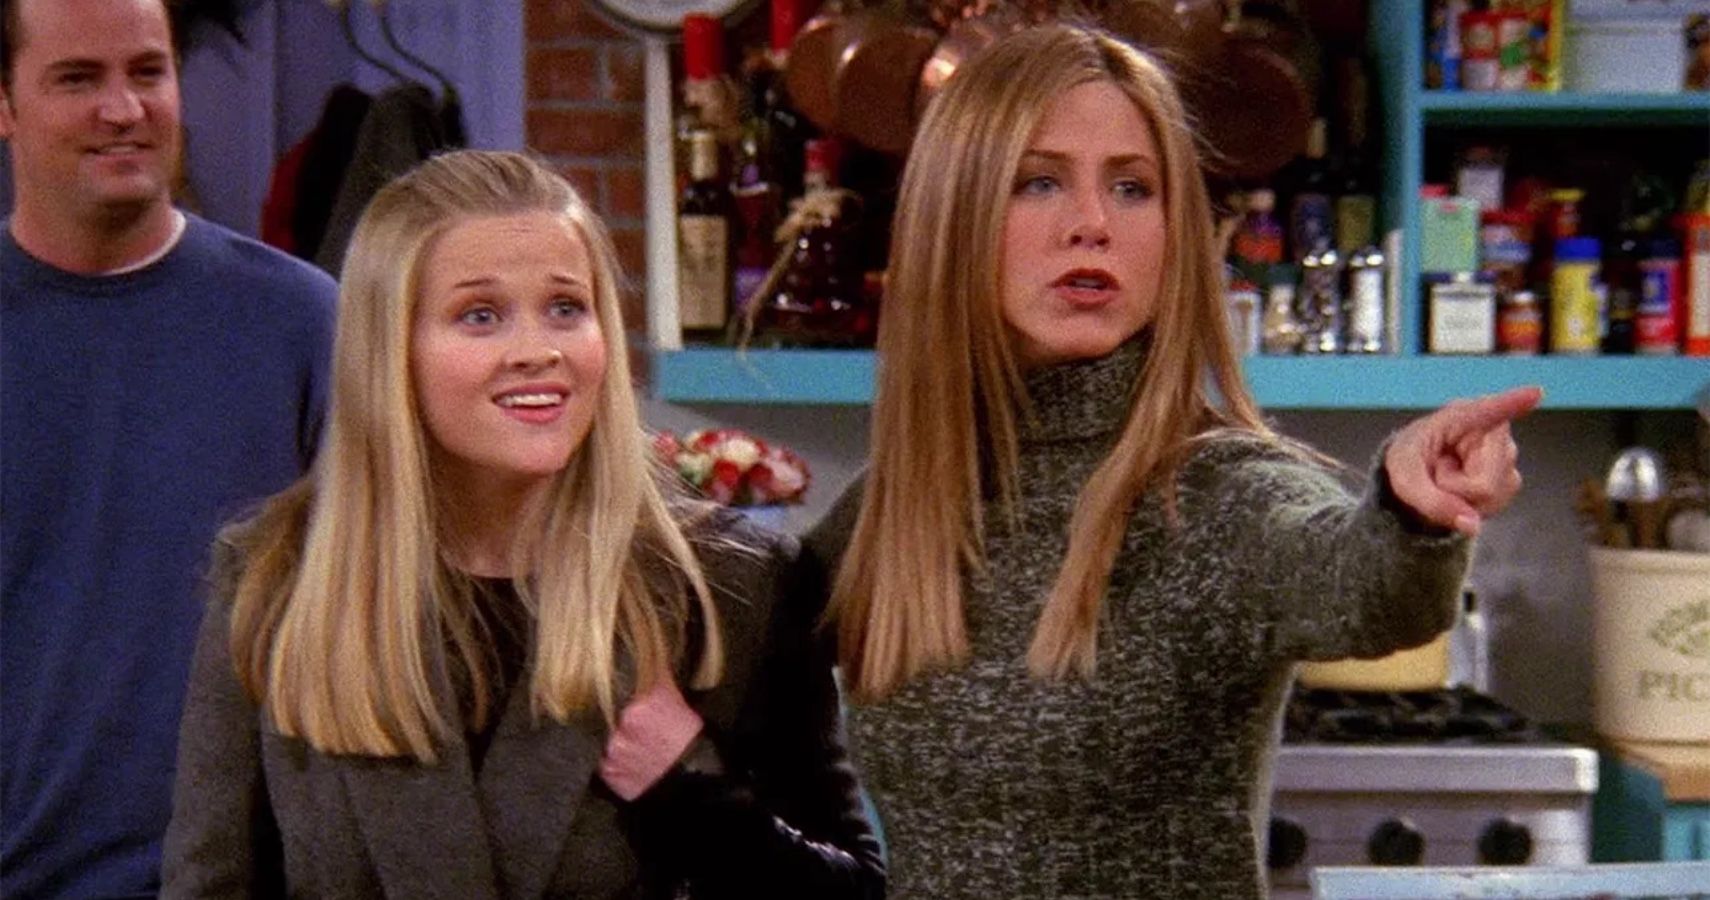 Jennifer Aniston deseja feliz aniversário a Reese Witherspoon com "Friends" Nod